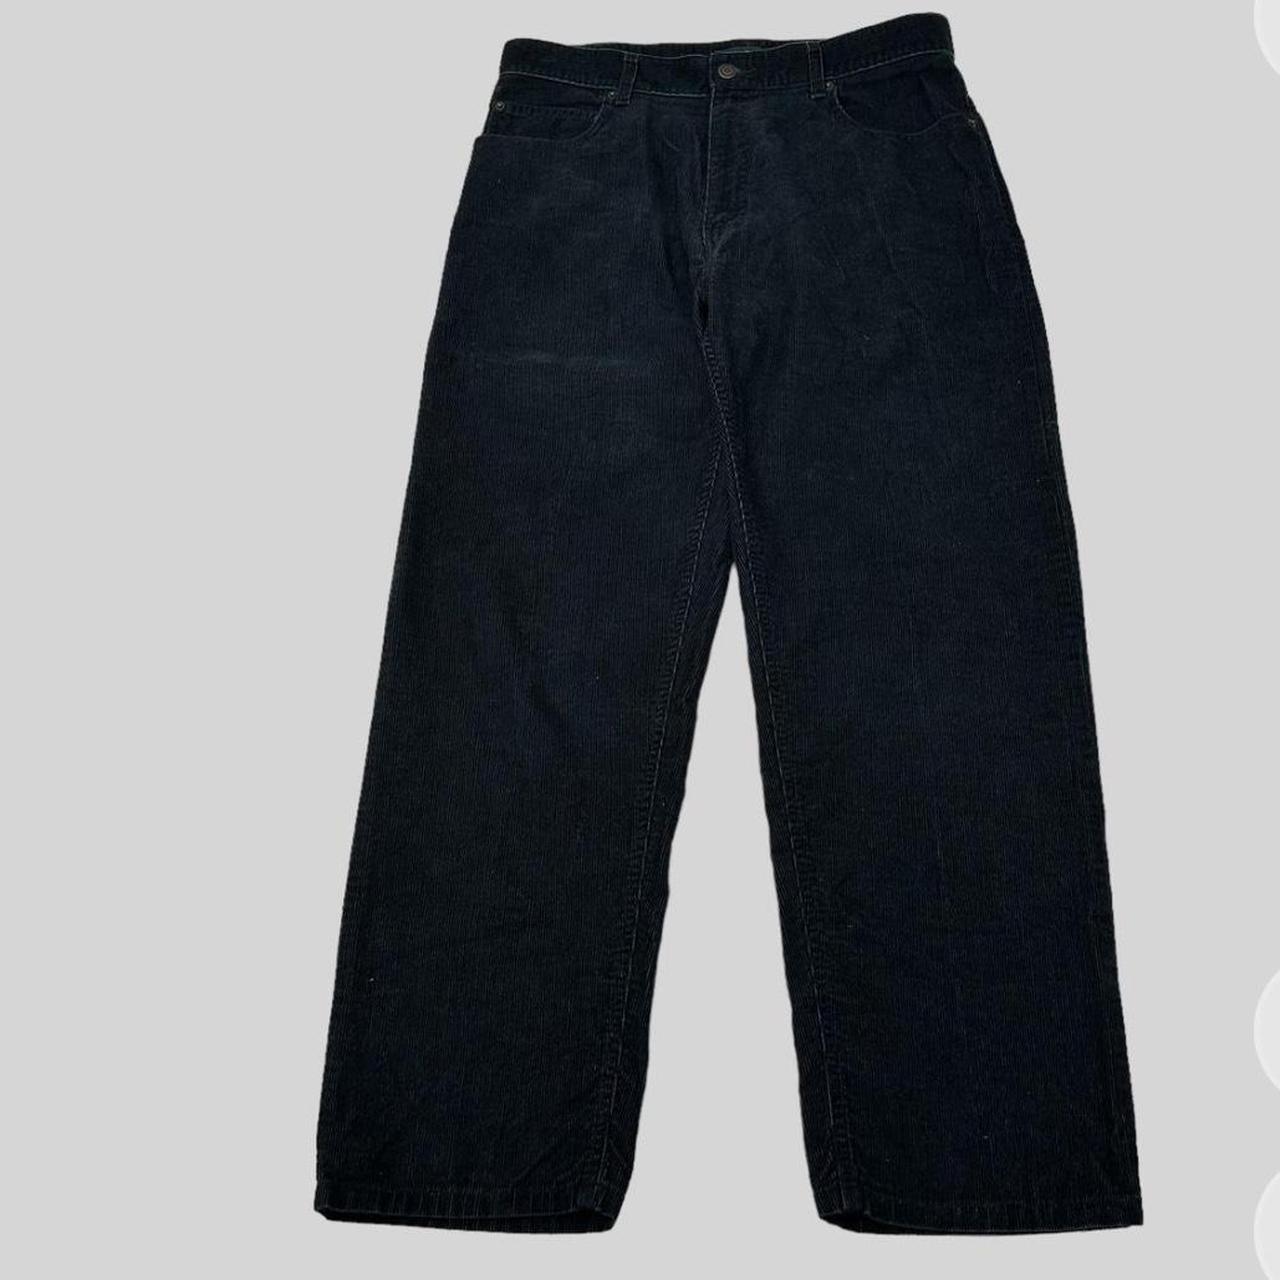 Vintage black corduroy dockers pants size 34 waist... - Depop